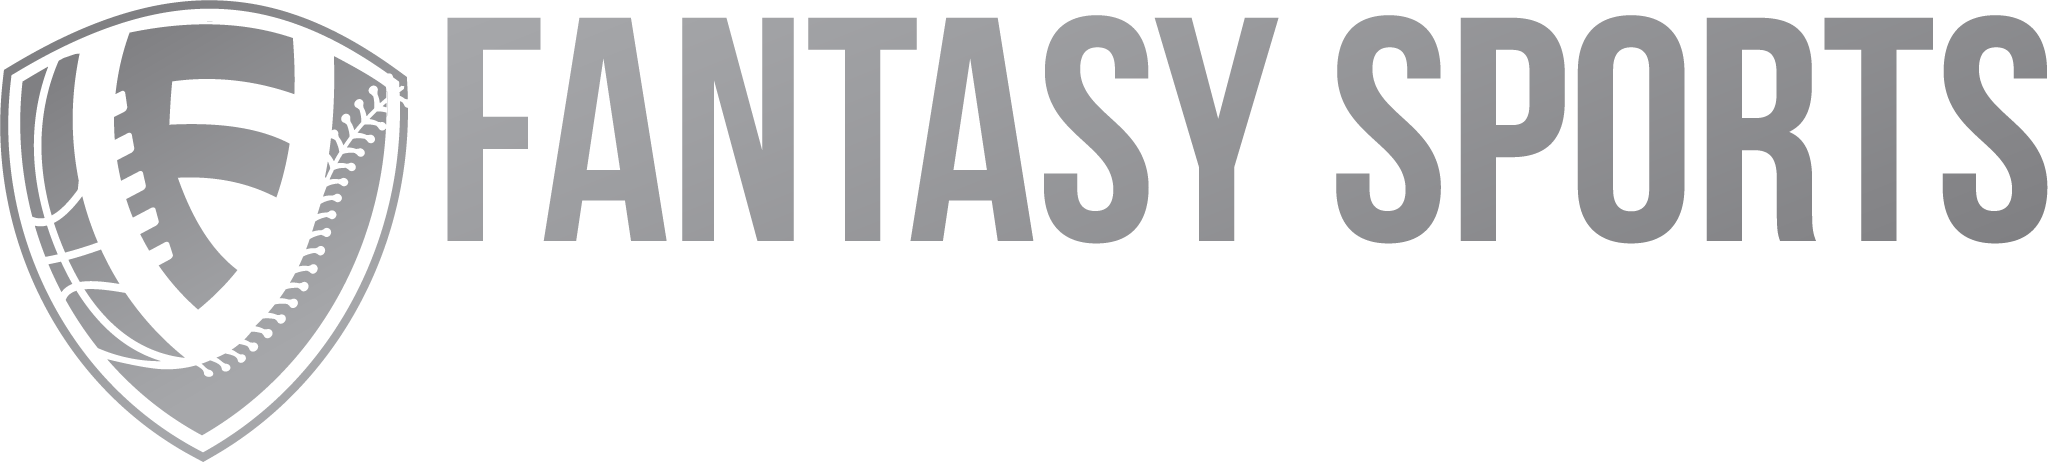 Fantasy Sports Advice Network